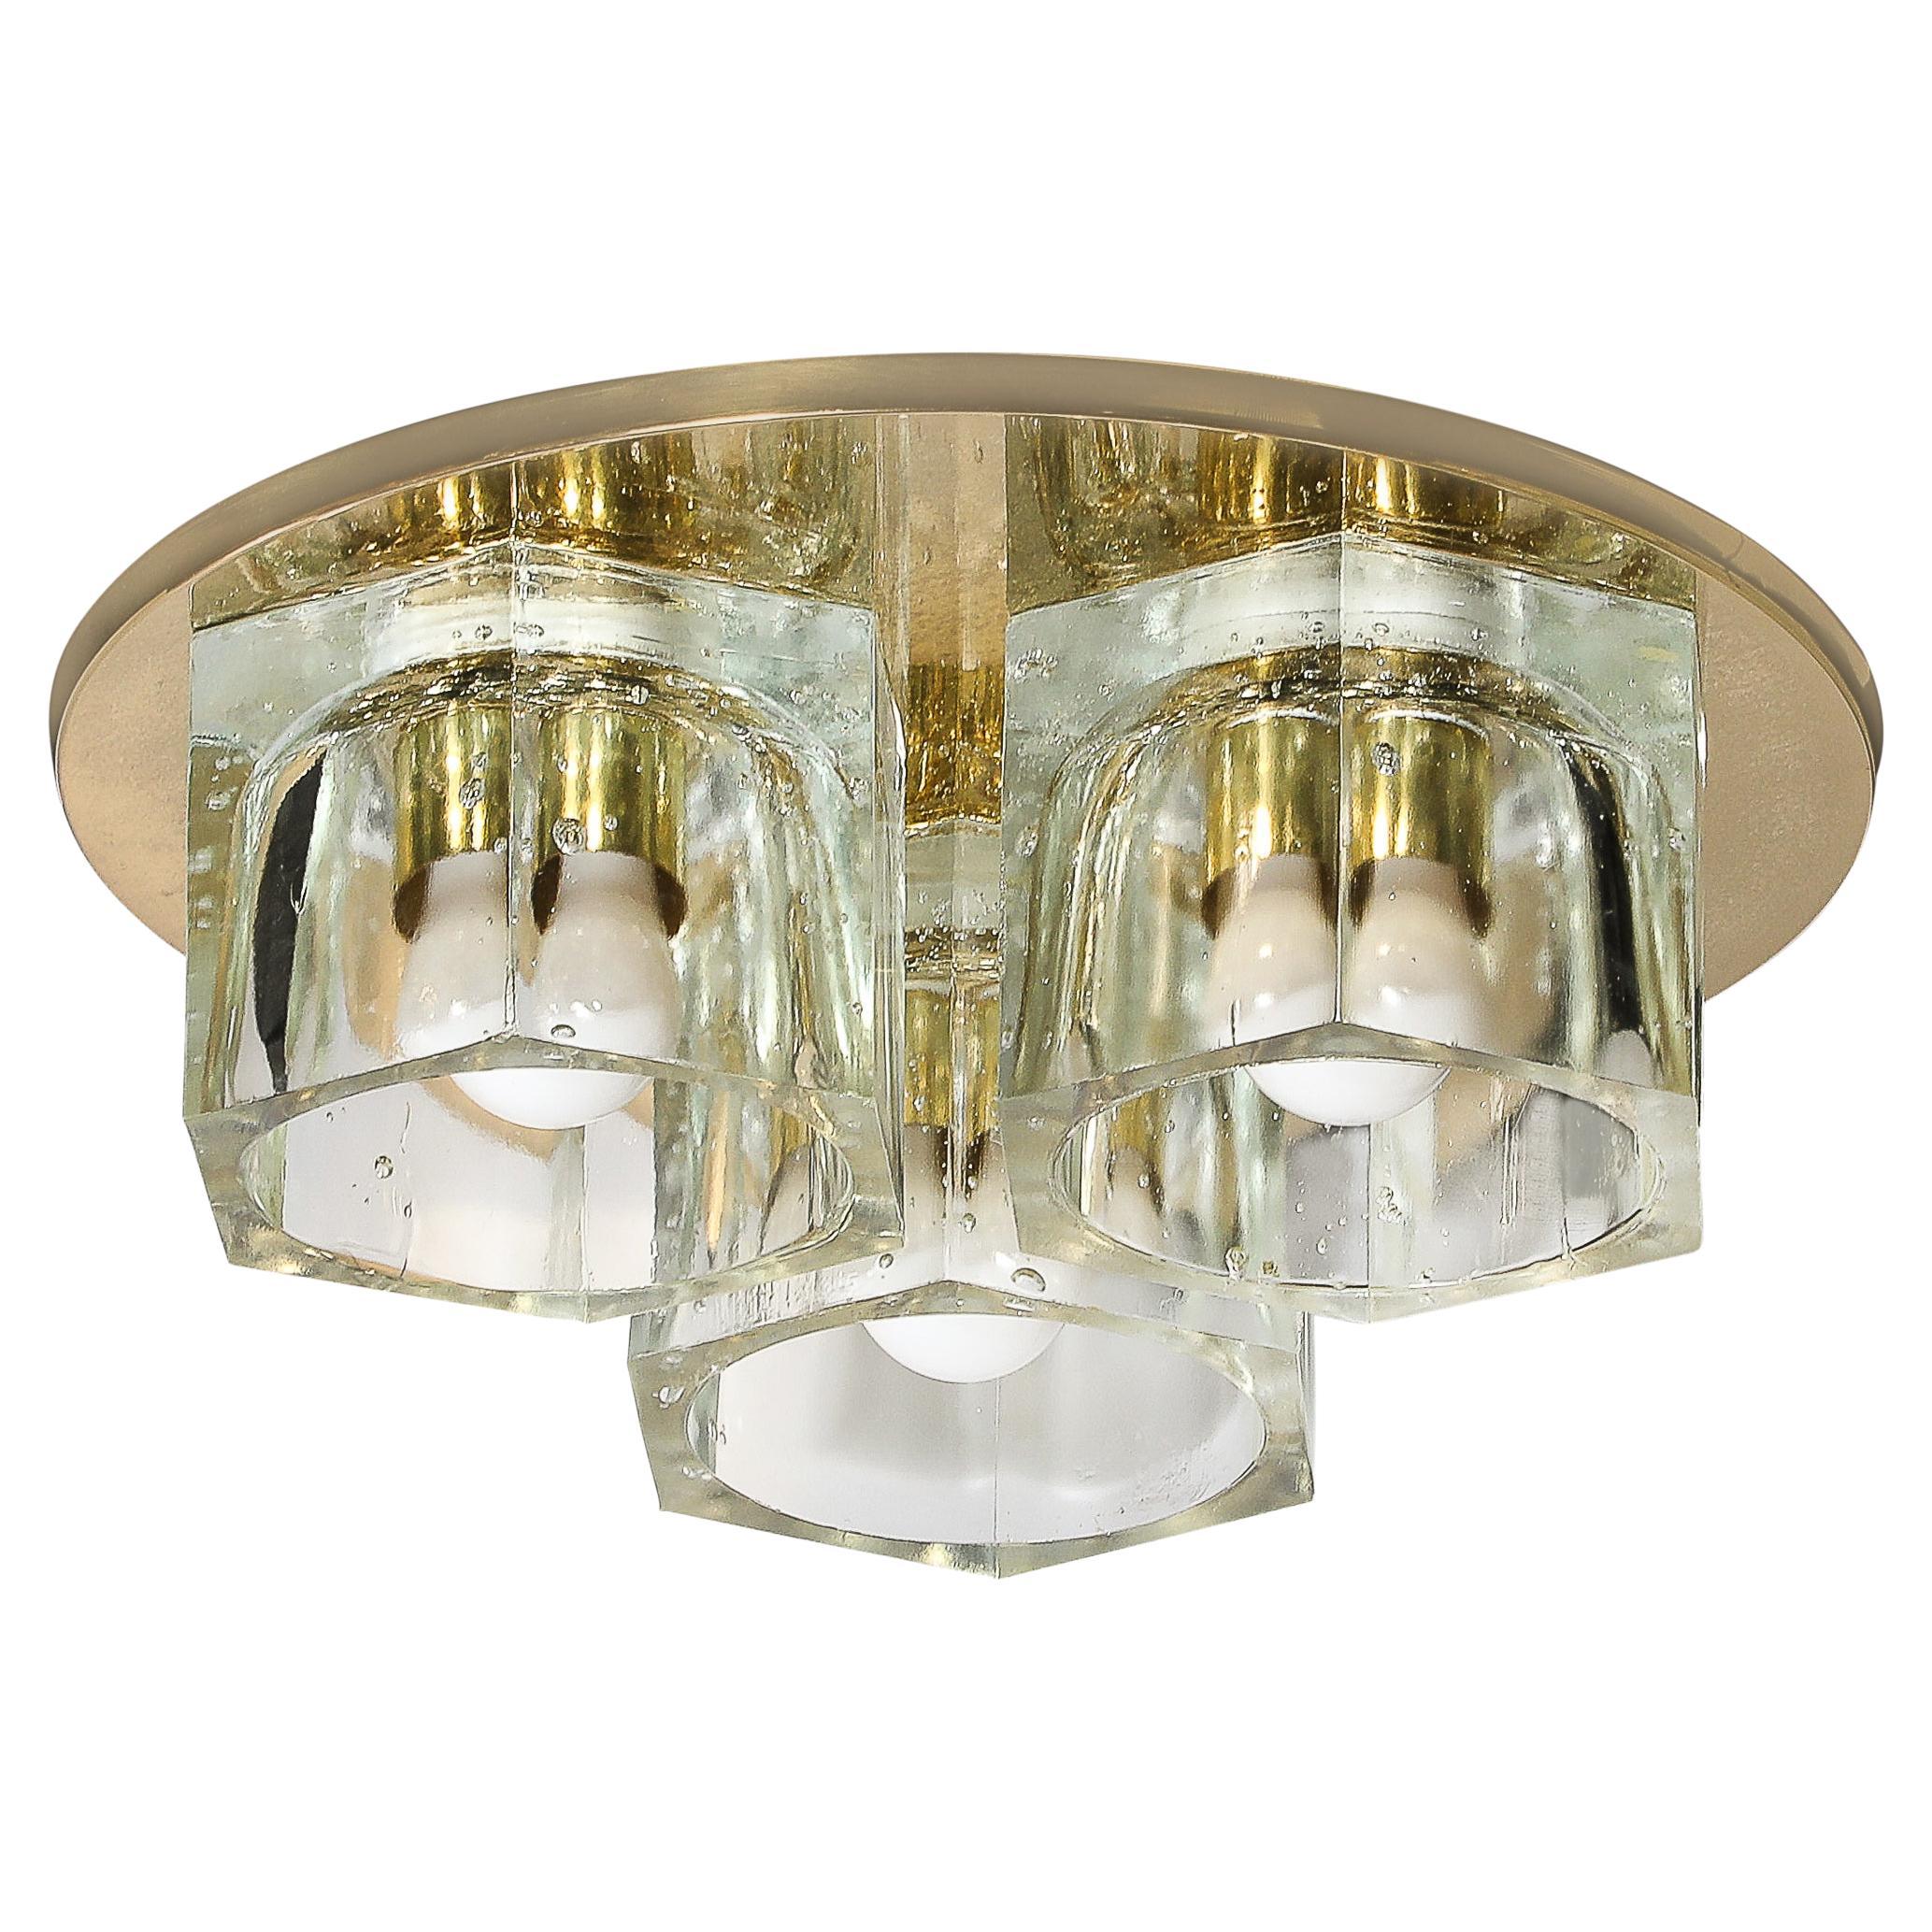 Mid-Century Hexagonal Glass Flush Mount Chandelier in Brass by Lightolier For Sale